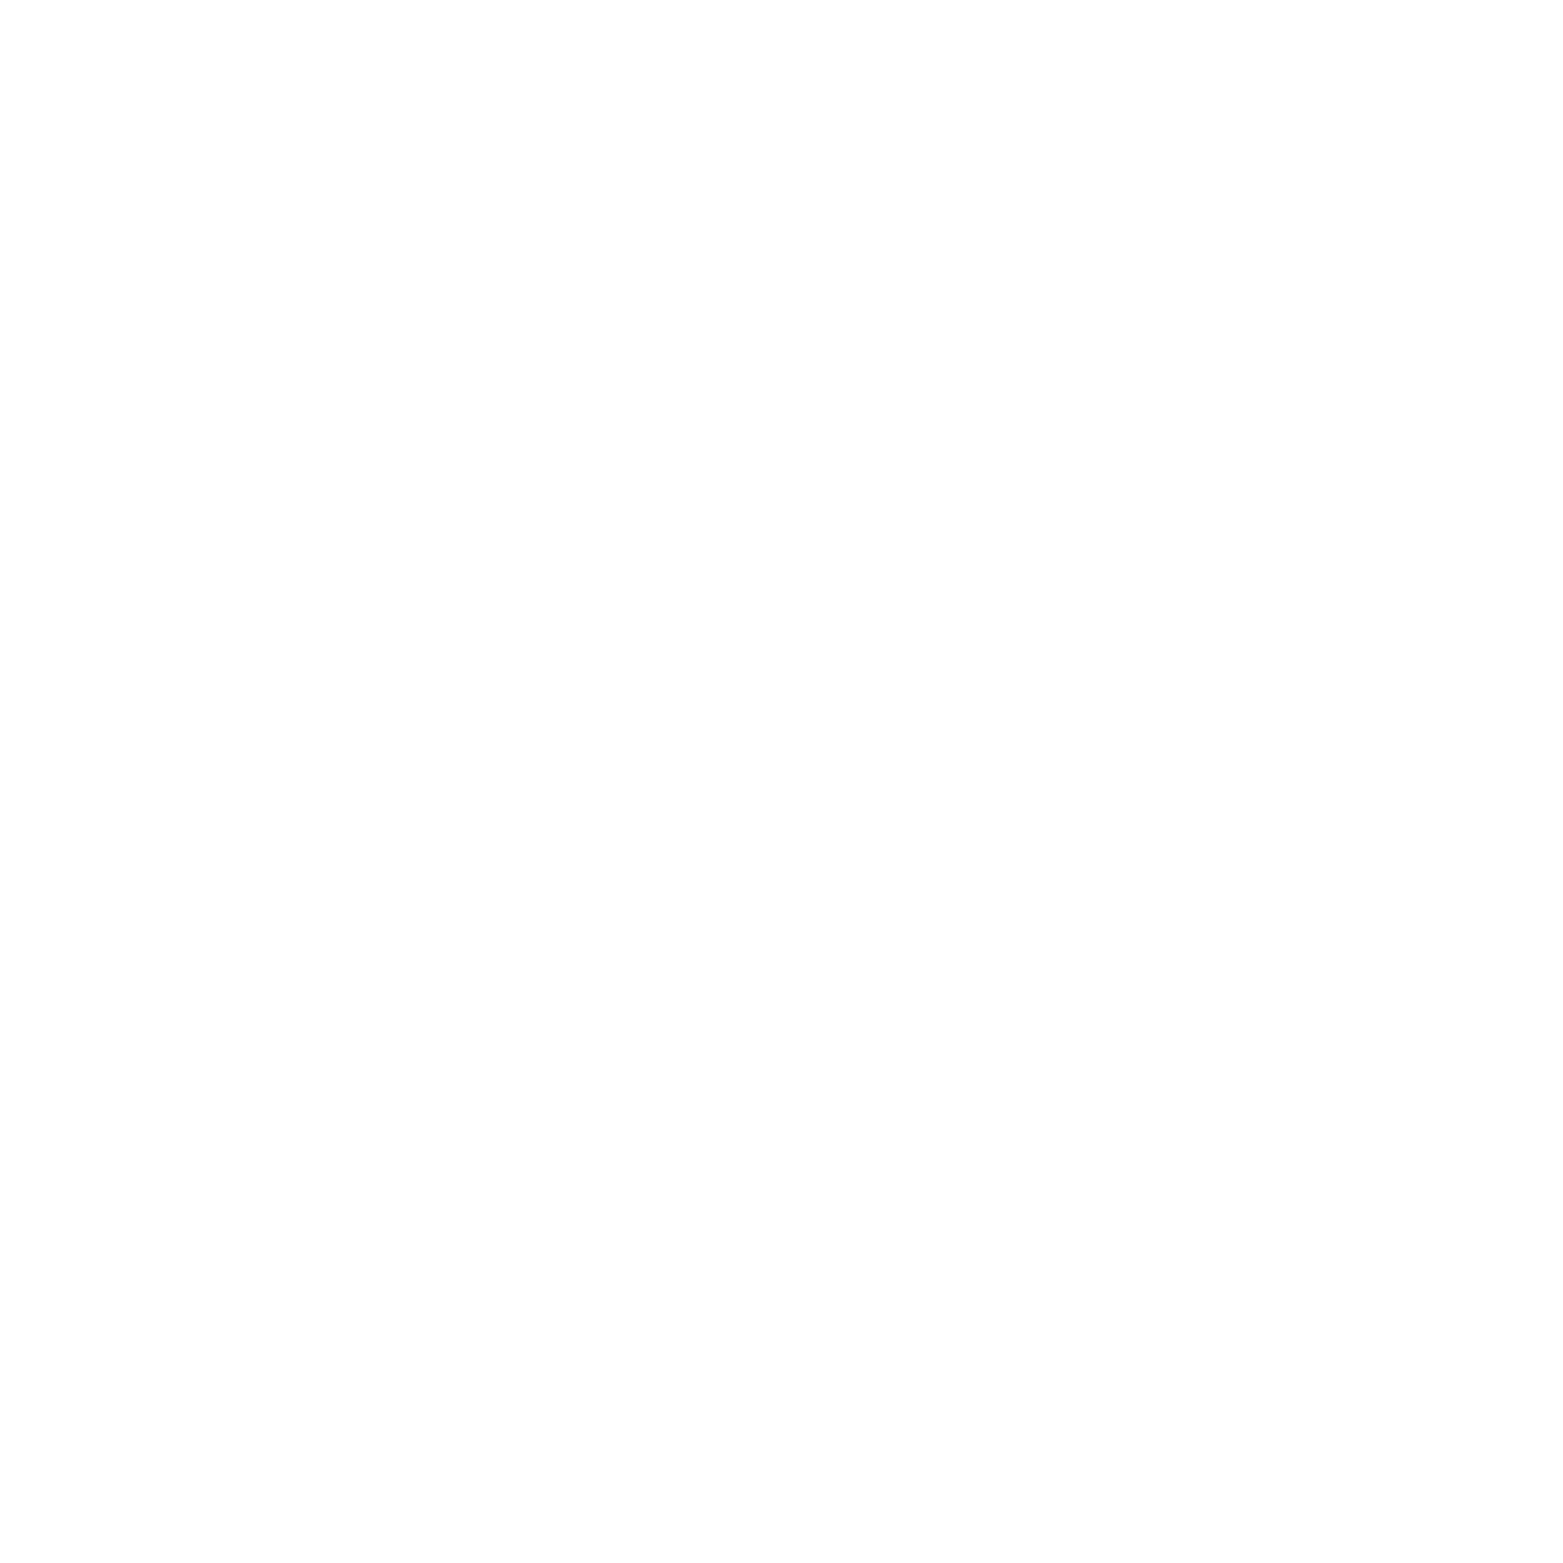 Bull I' Th' Thorn Logo